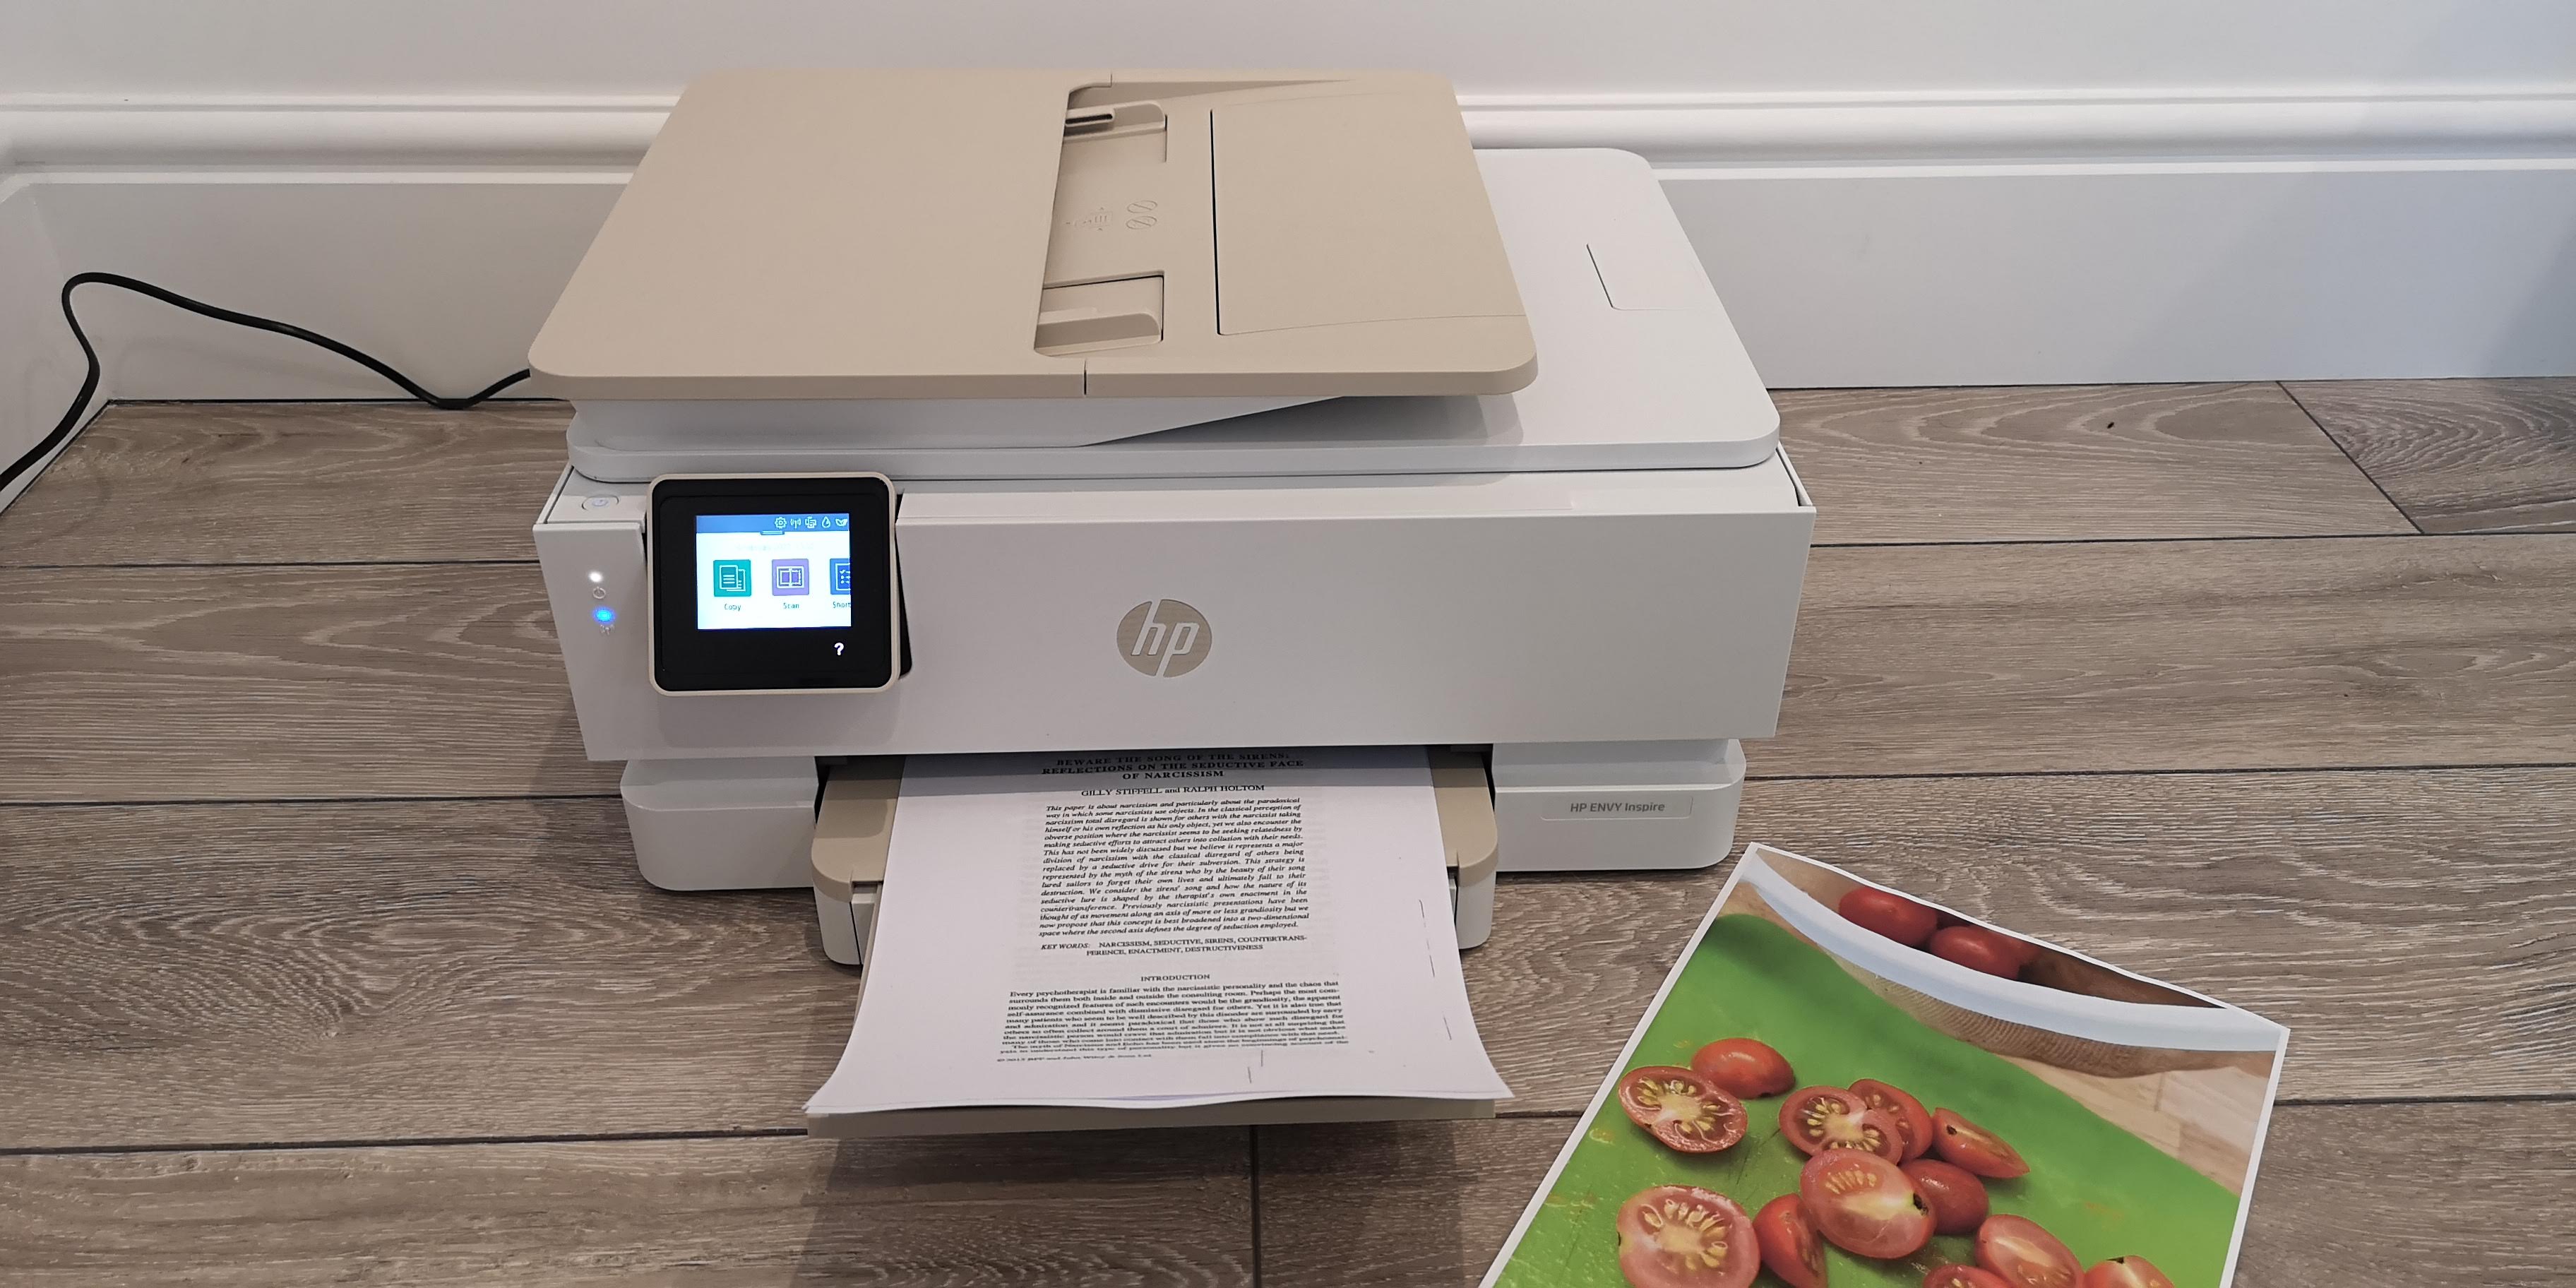 HP Envy Inspire 7220E All In One Printer